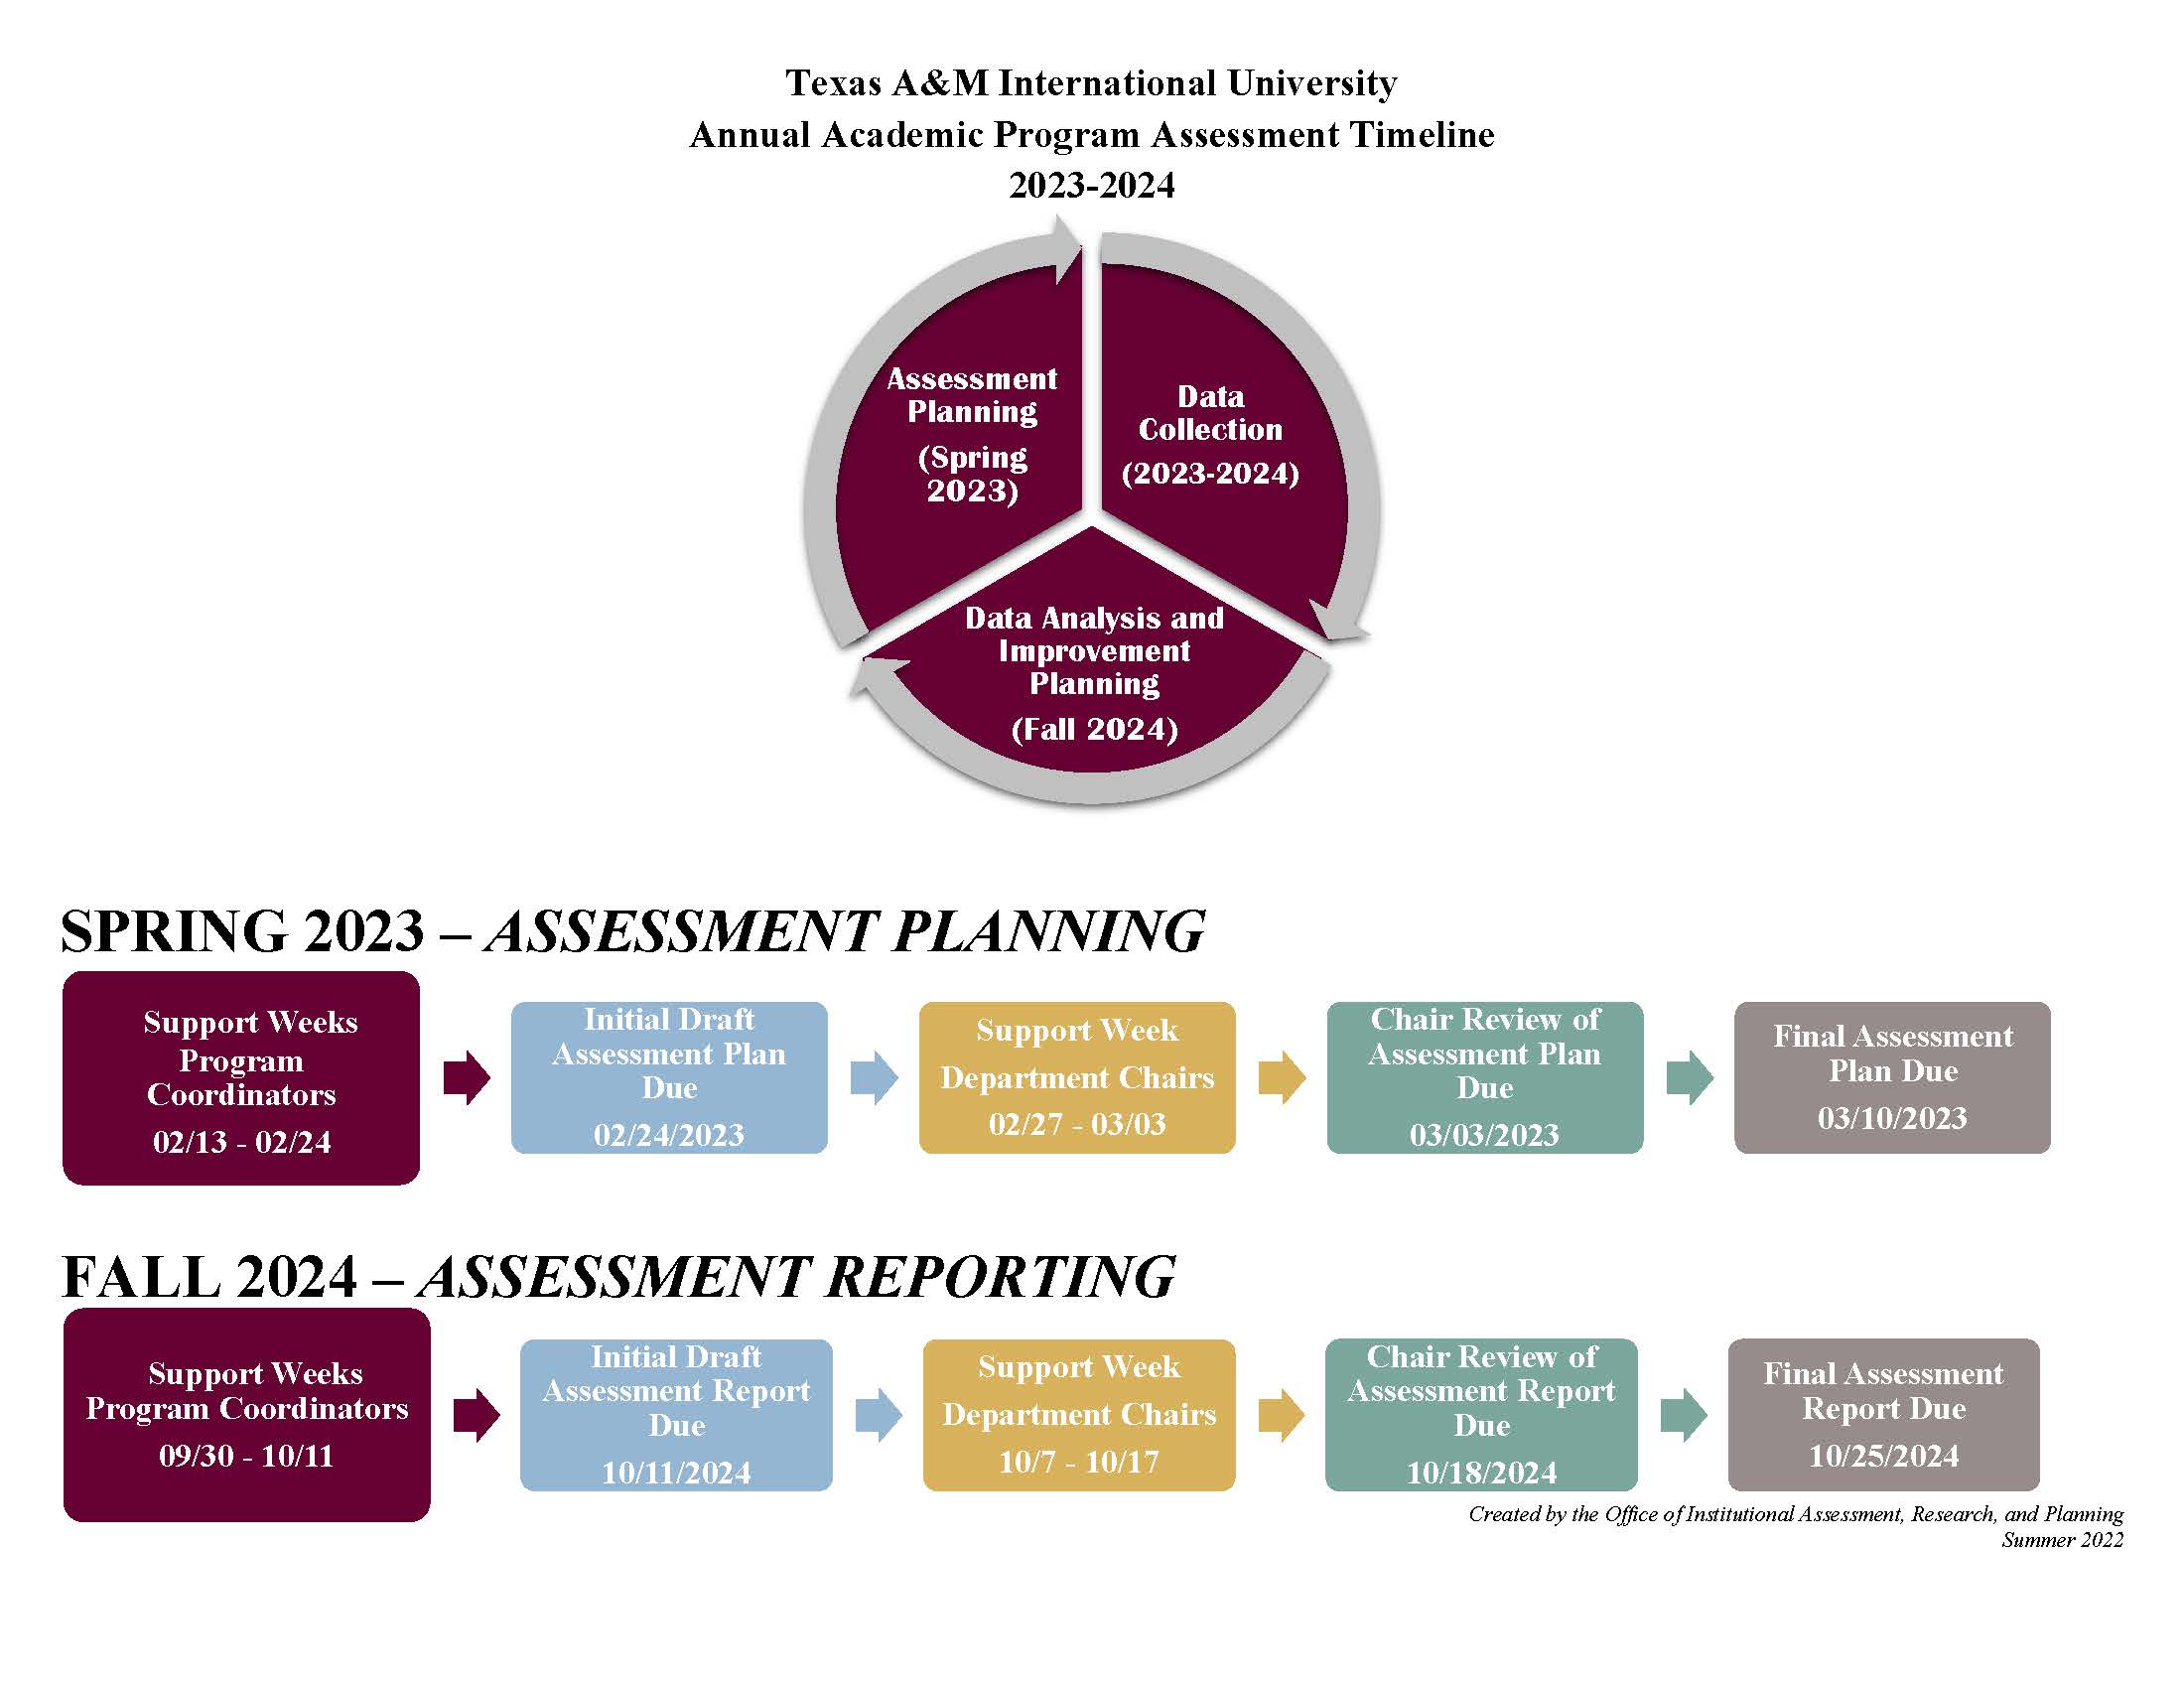 2023-2024 Assessment Timeline